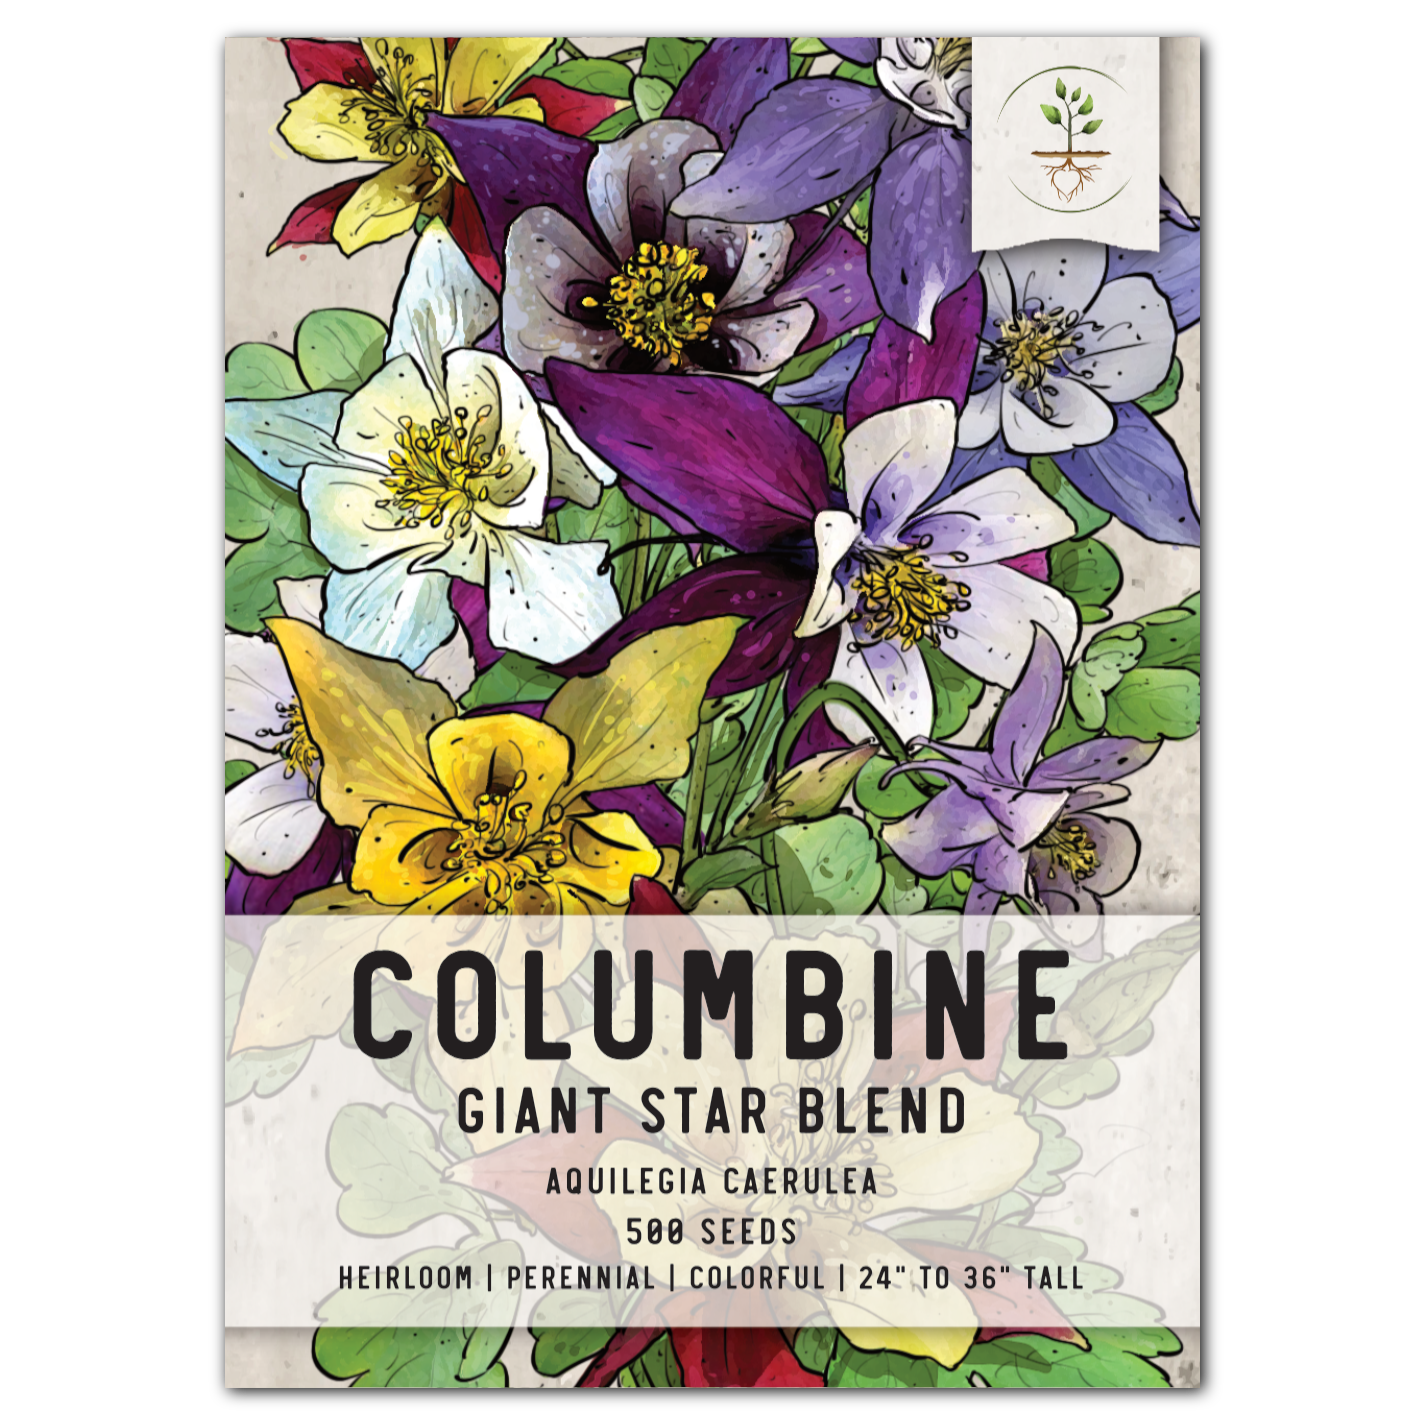 Giant Star, Mckana's Columbine Seeds For Planting (Aquilegia caerulea)